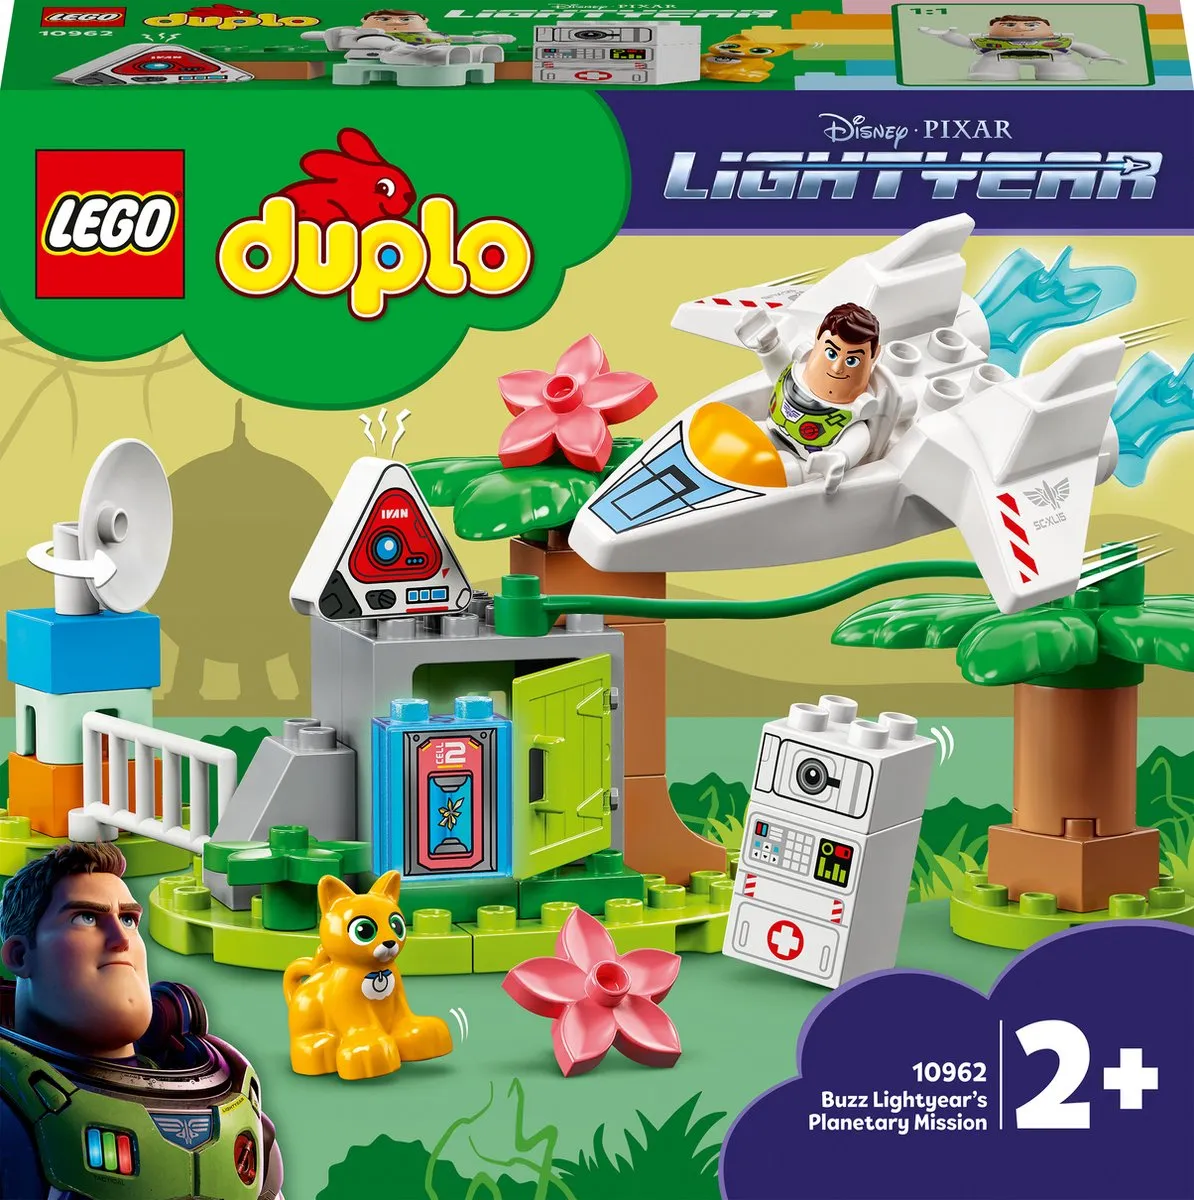 LEGO DUPLO Disney Buzz Lightyear Planeetmissie - 10962 speelgoed